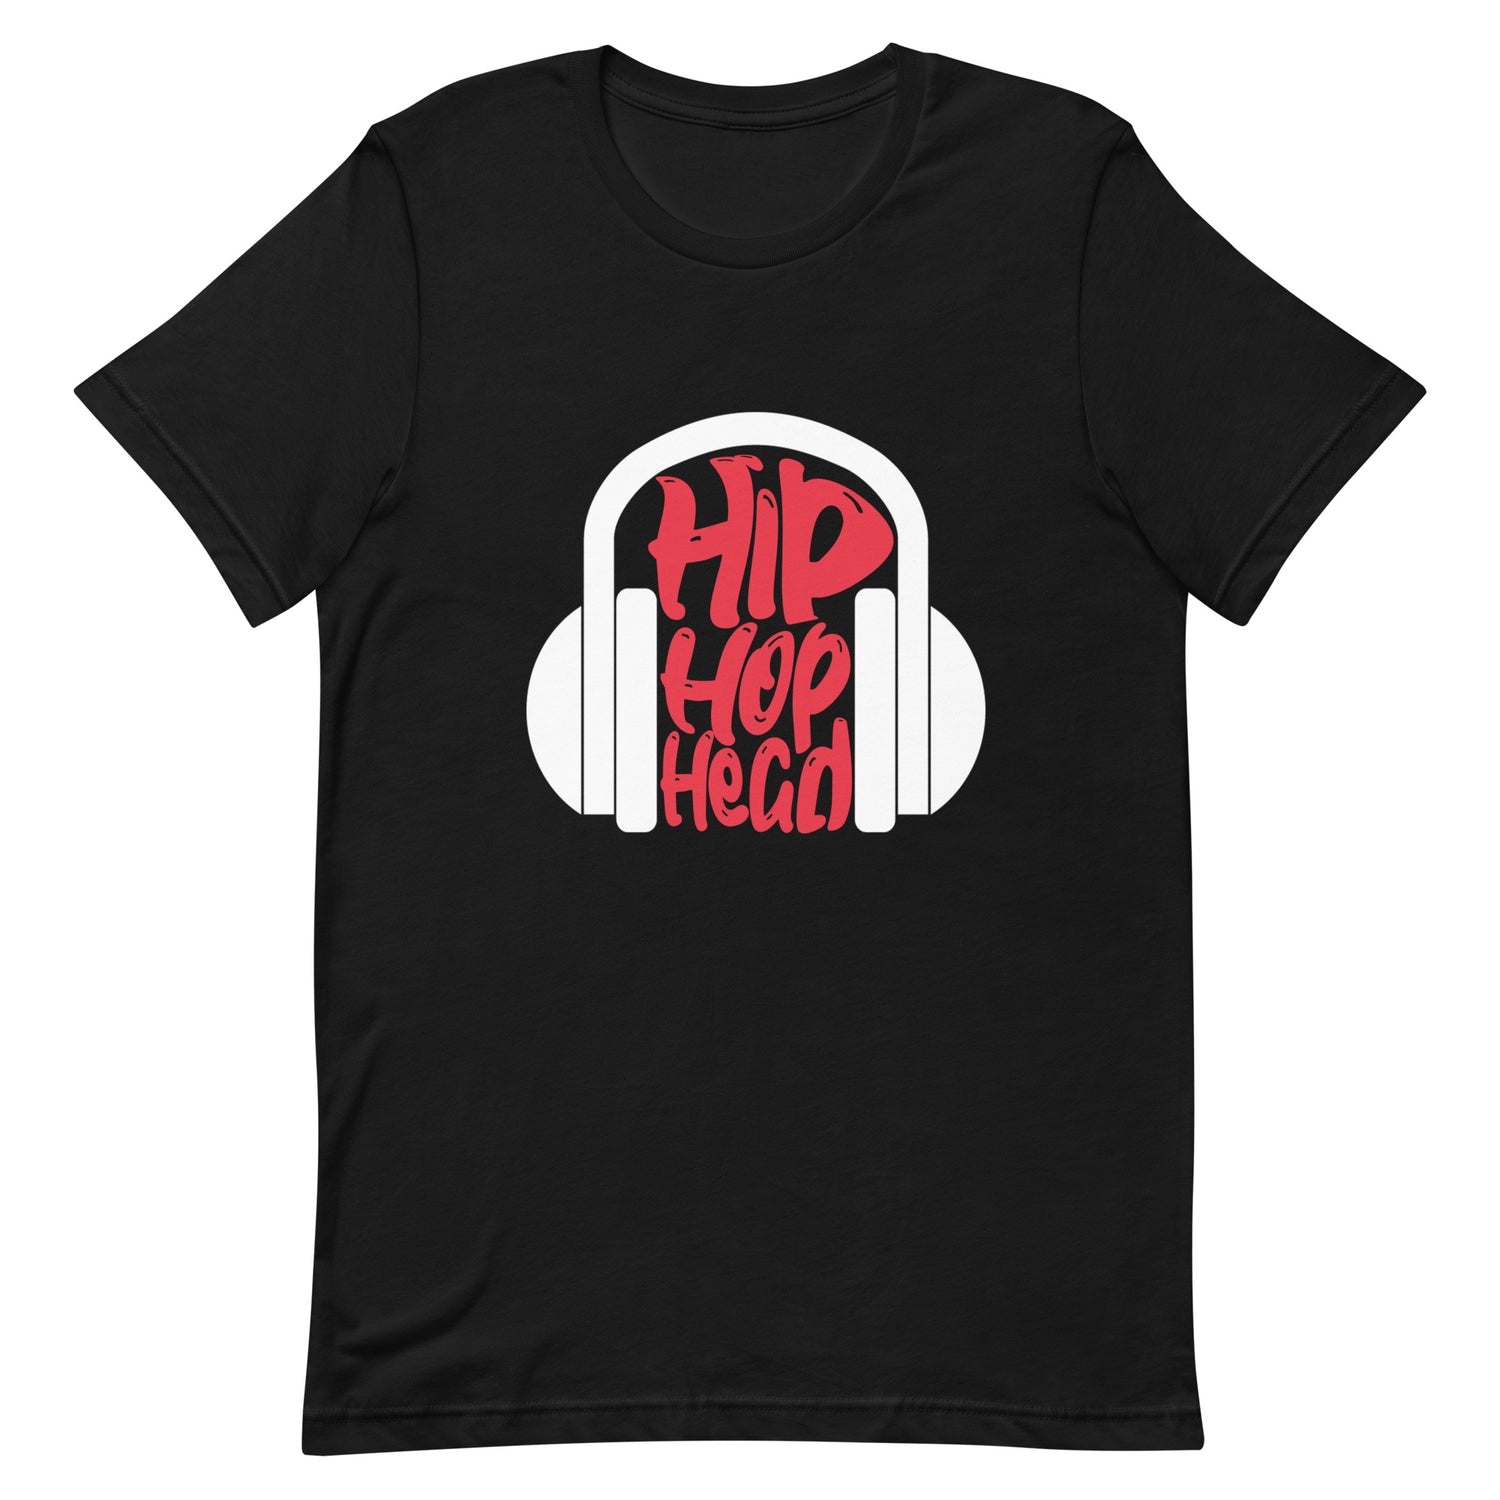 Hip Hop head black shirt 